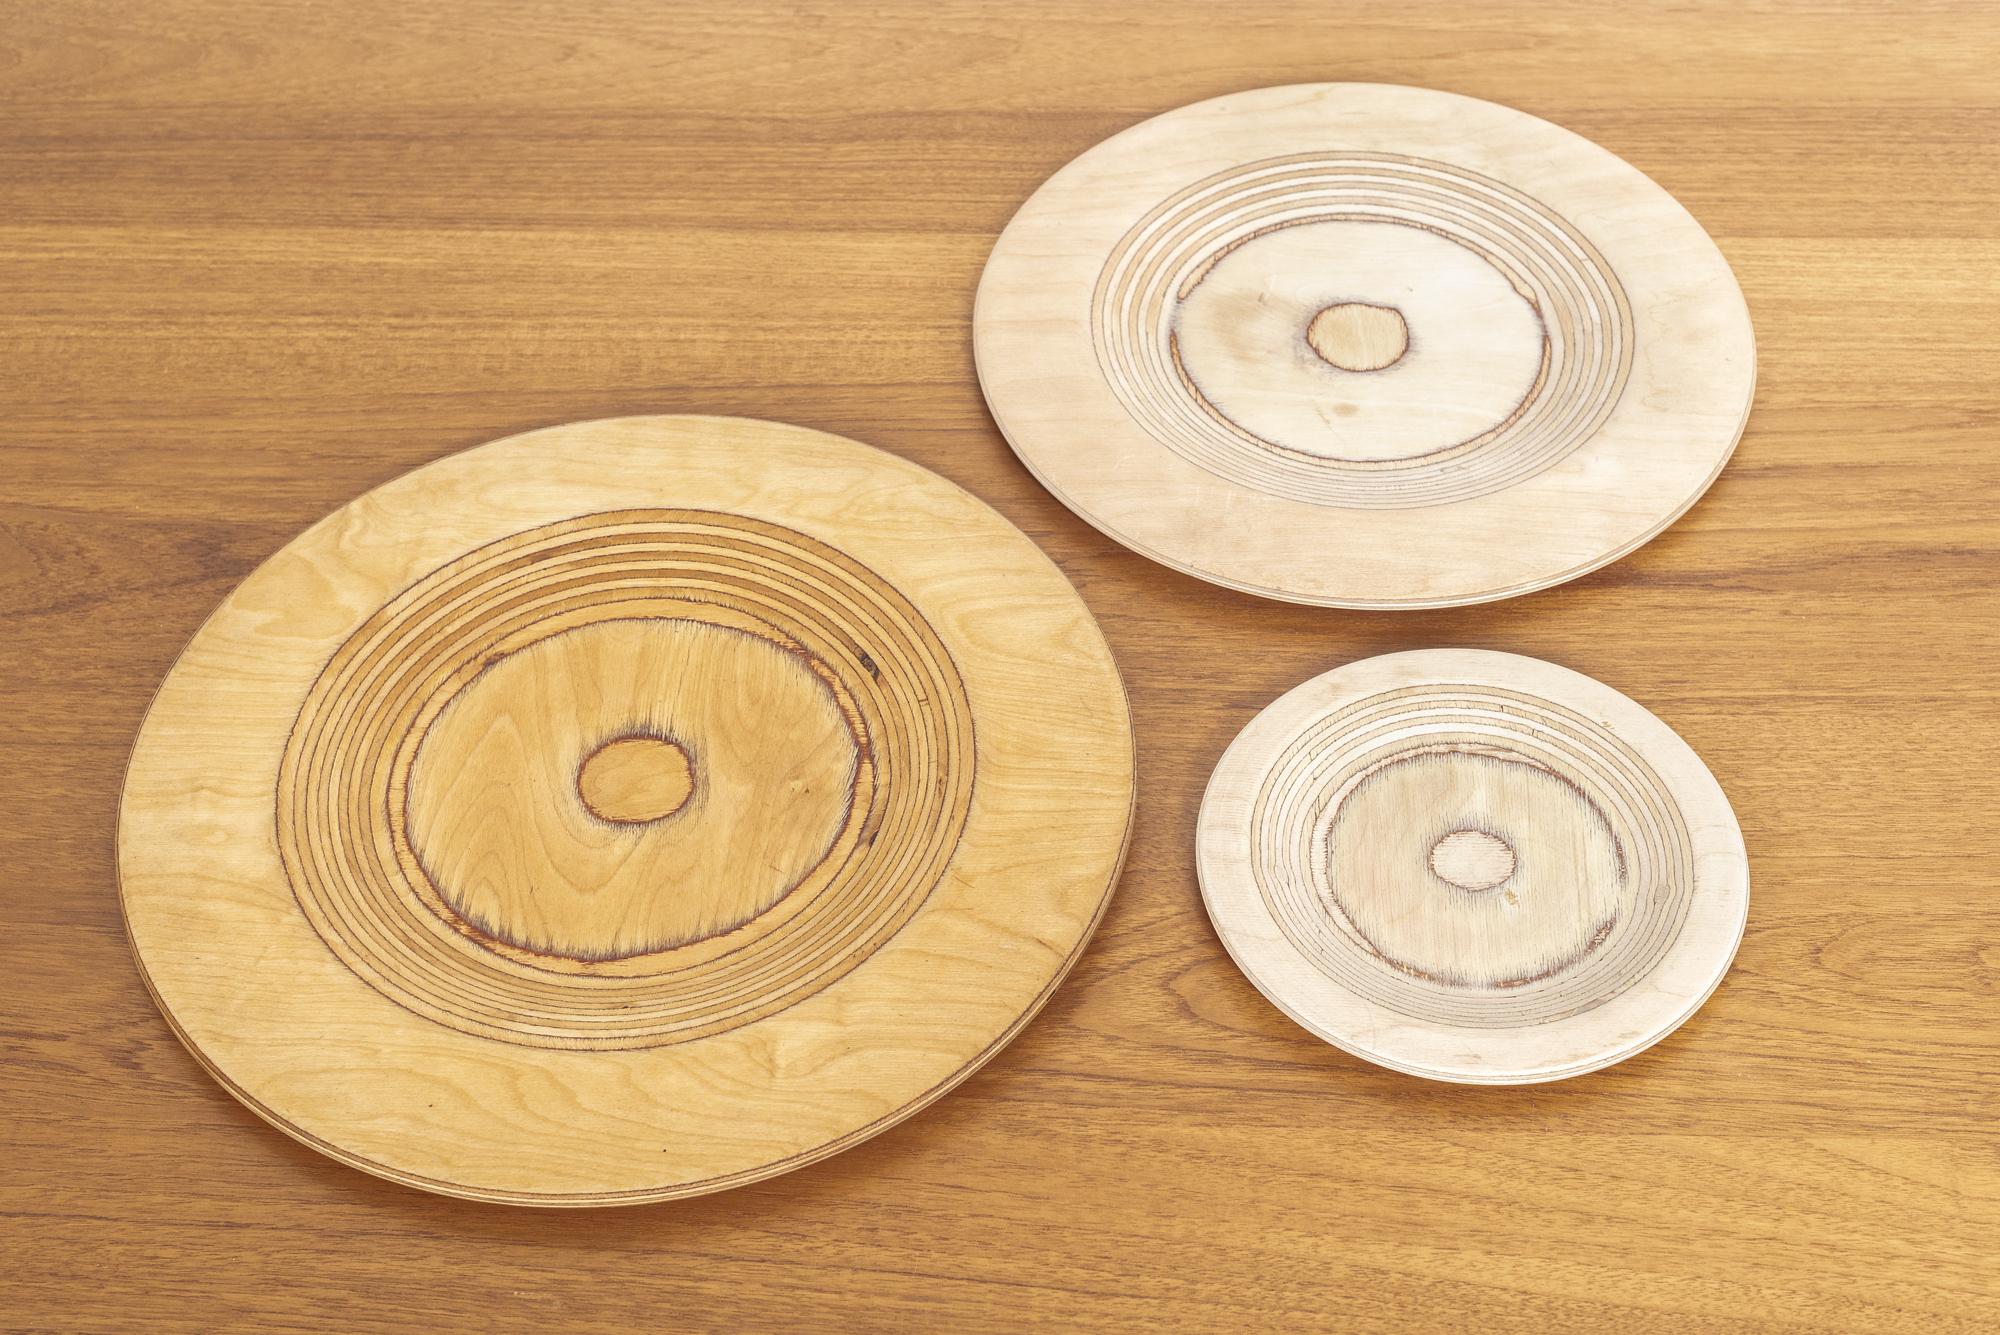 Mid-20th Century Midcentury Finnish Modern Wooden Plate by Saarinen for Keuruu